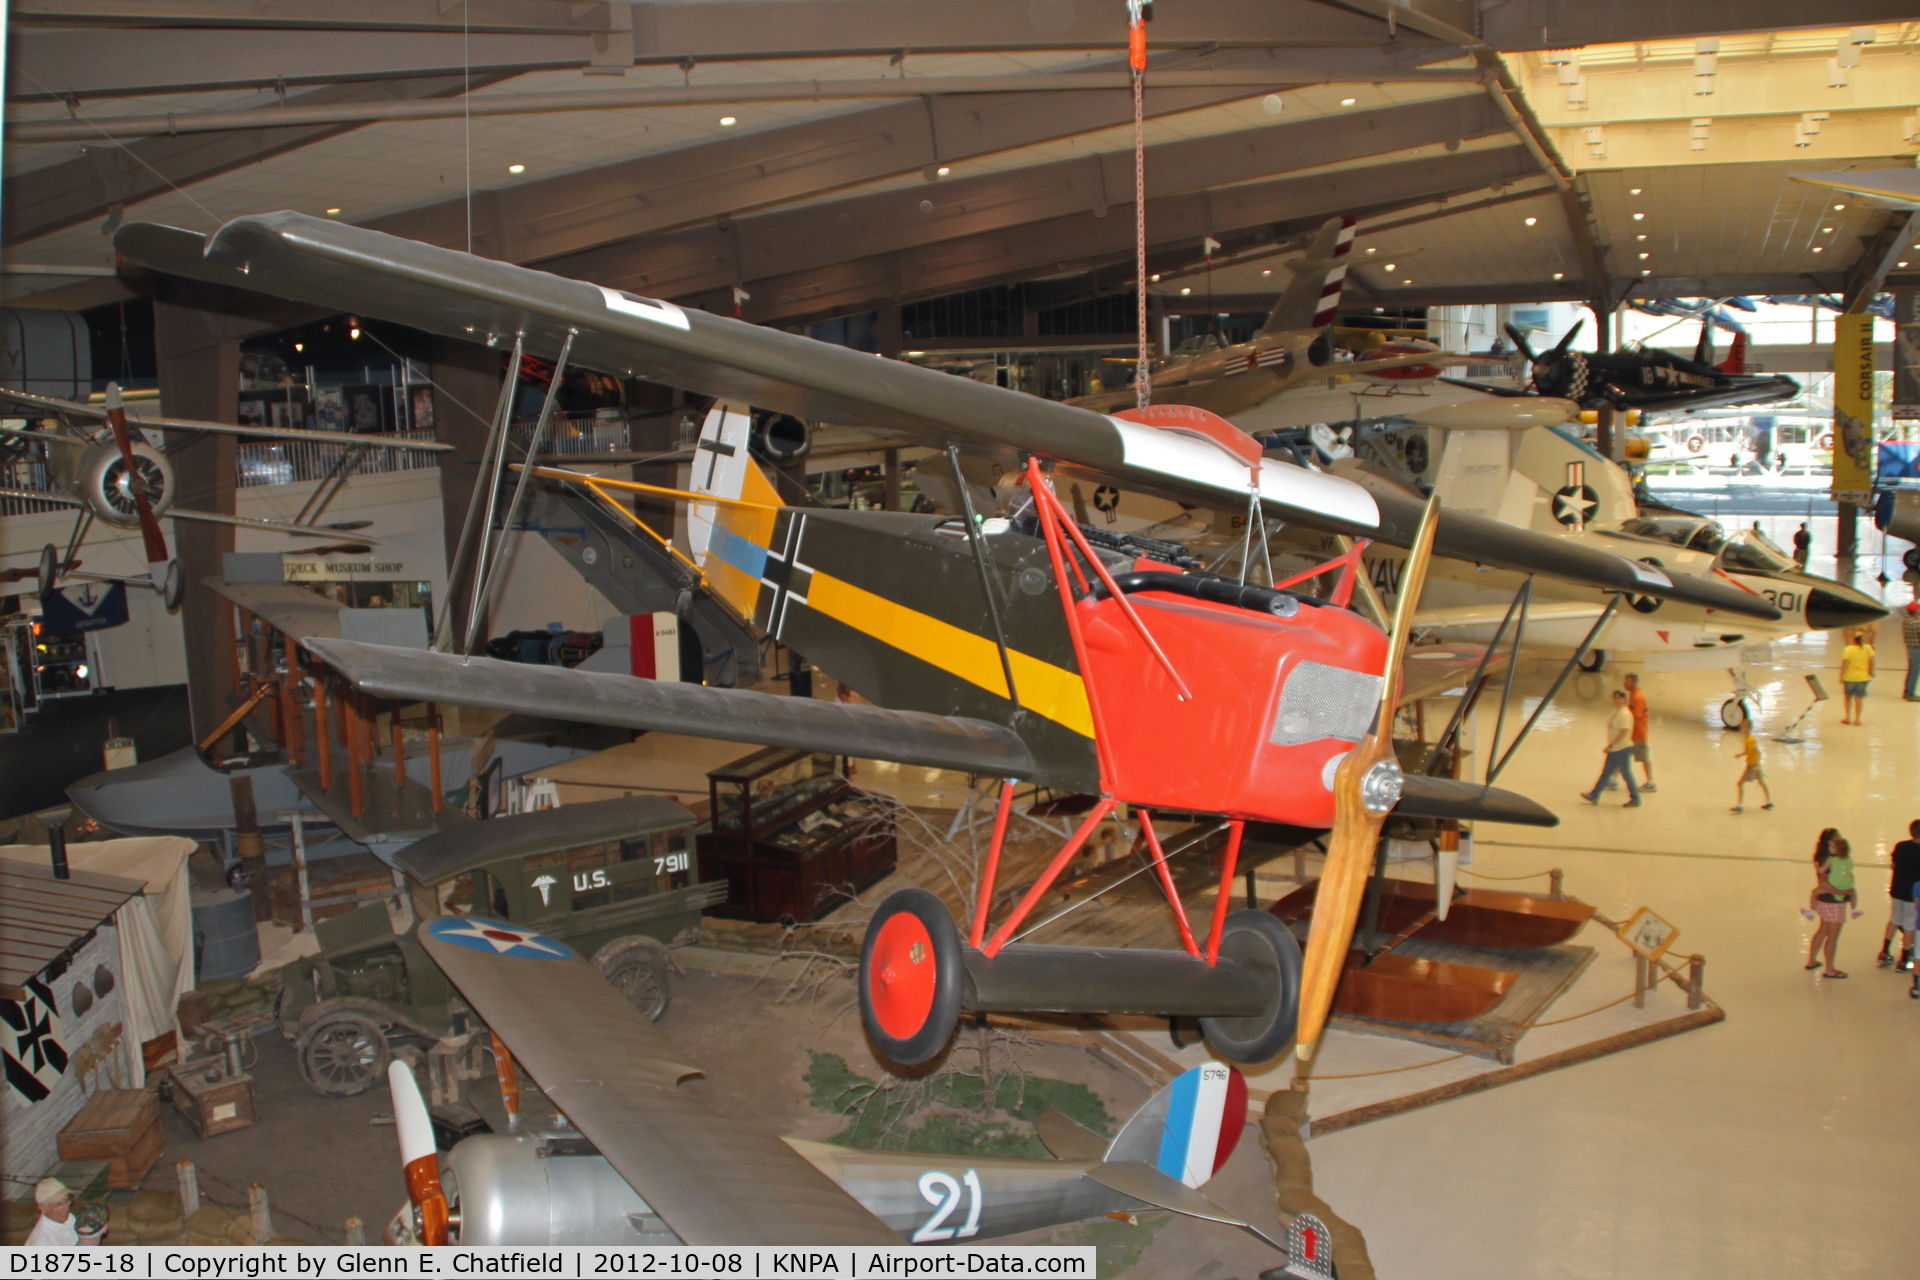 D1875-18, 1918 Fokker D-VII C/N Not found D1875-18, Naval Aviation Museum